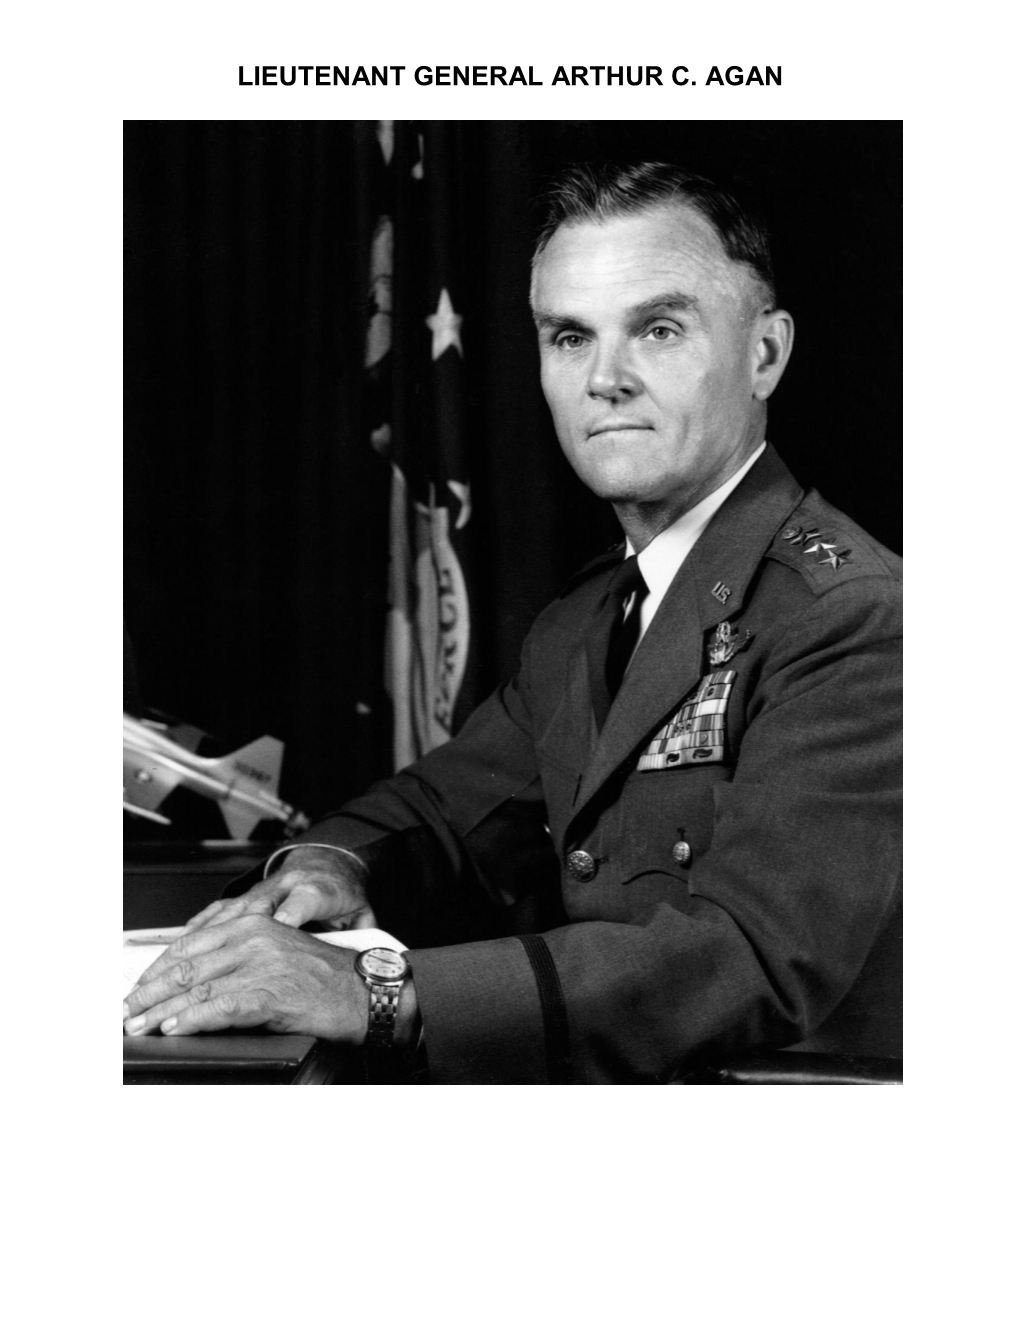 Lieutenant General Arthur C. Agan